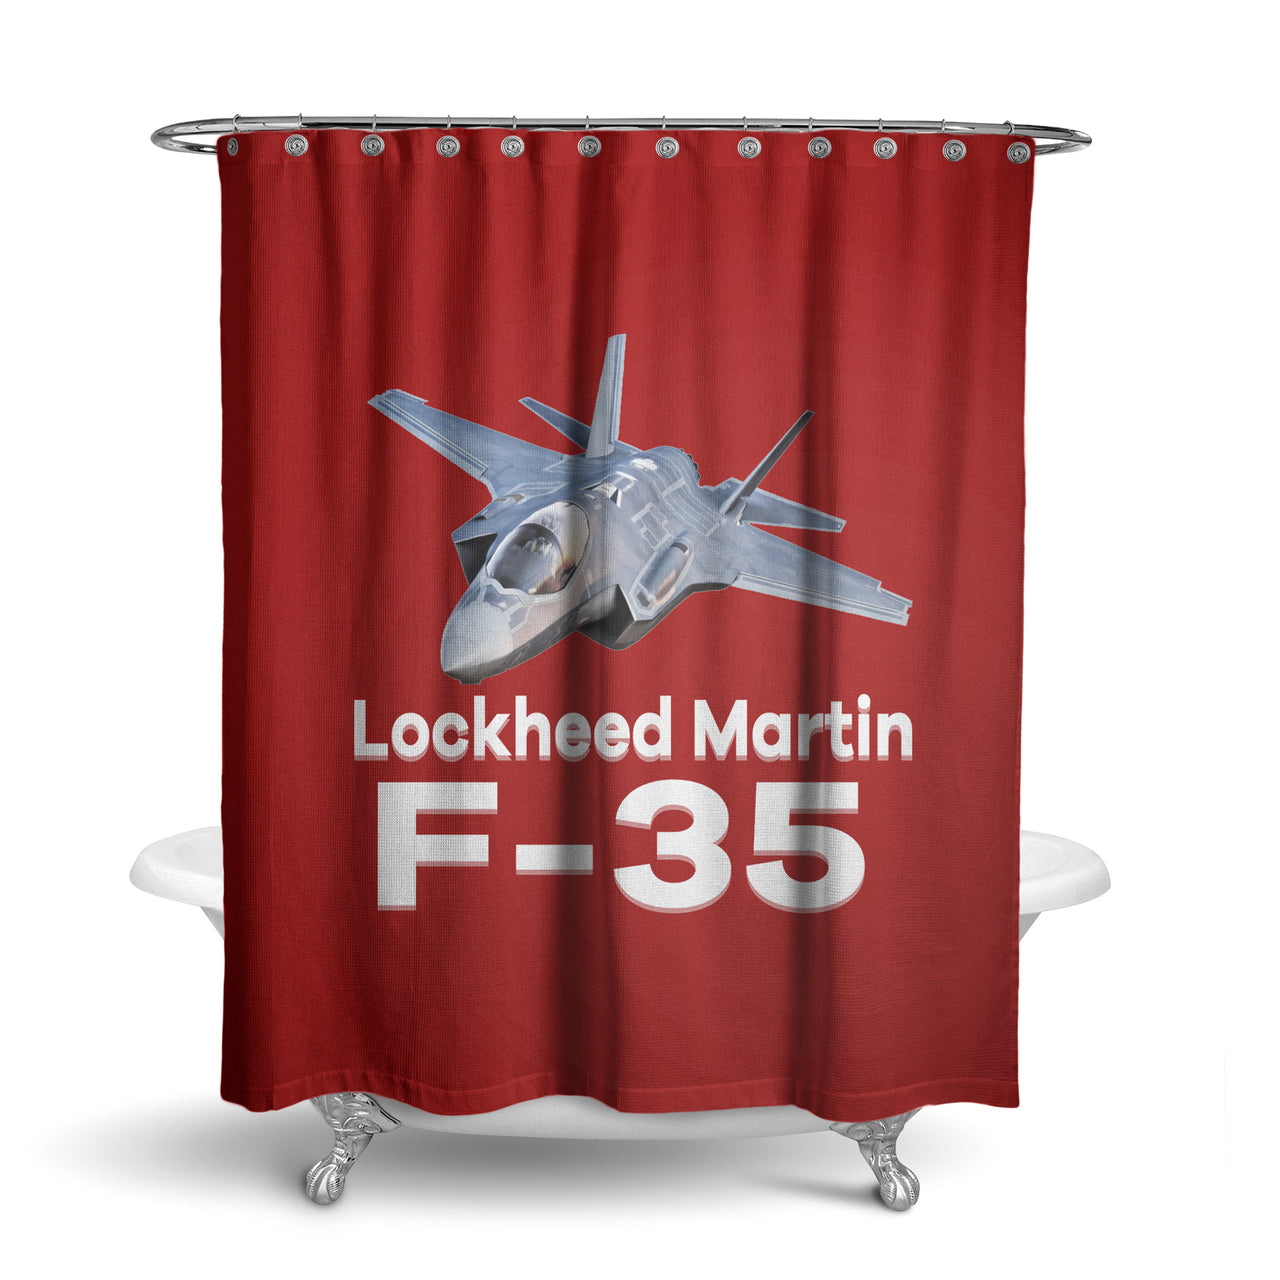 The Lockheed Martin F35 Designed Shower Curtains